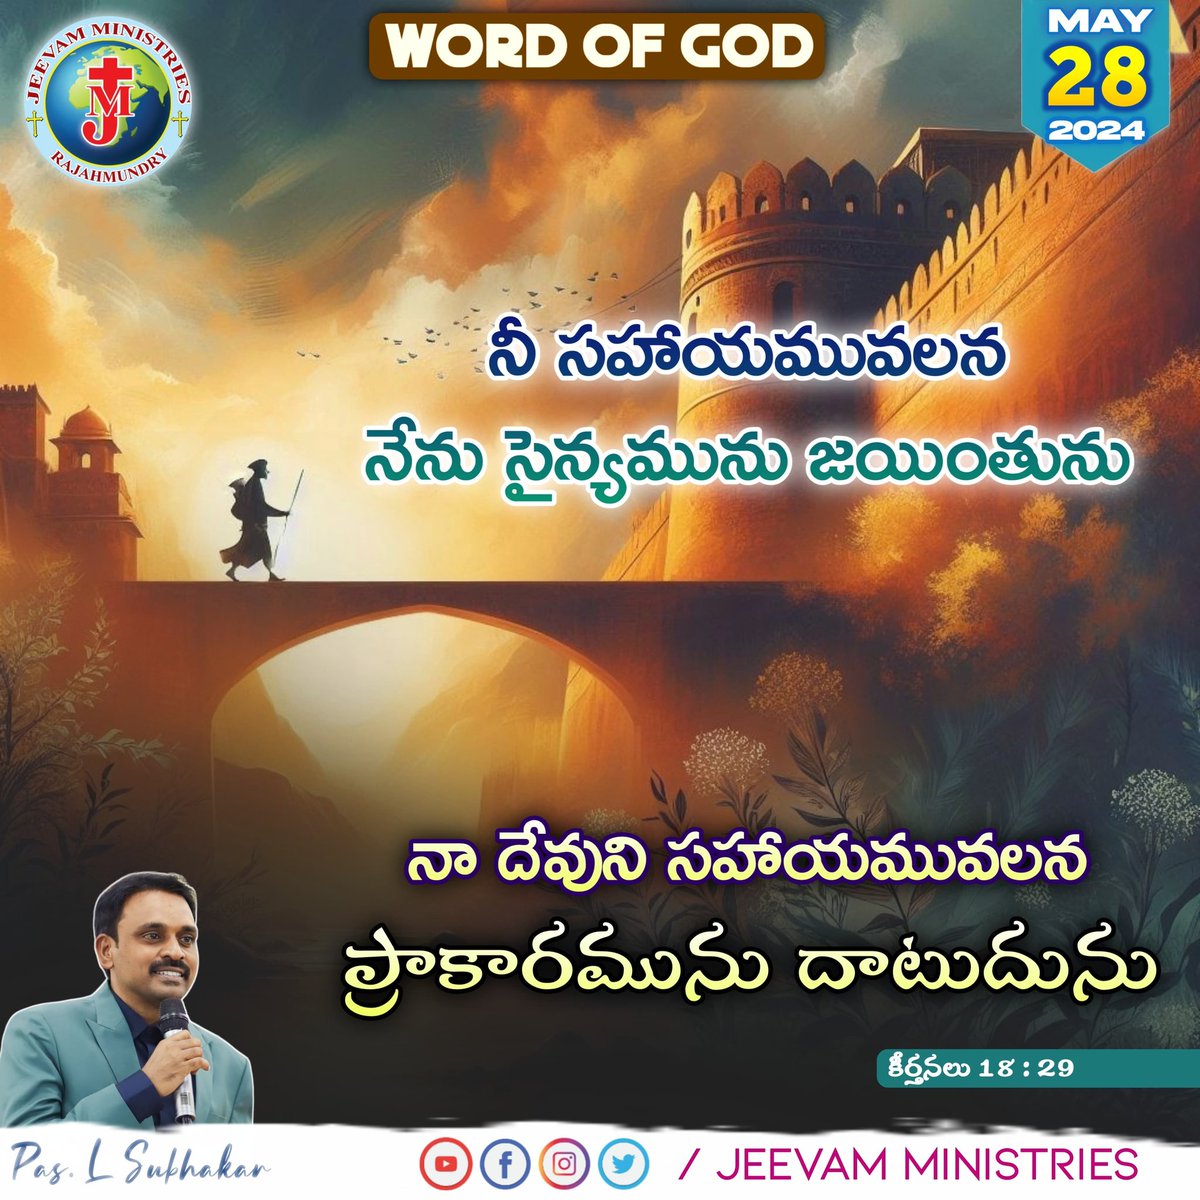 Today's Word of God 🙏
#dailybibleverse✝️ #TeluguBible #Pastor #SUBHAKAR
#JEEVAMMINISTRIES 
#Rajahmundry 
#Tuesdaymotivation #28May2024